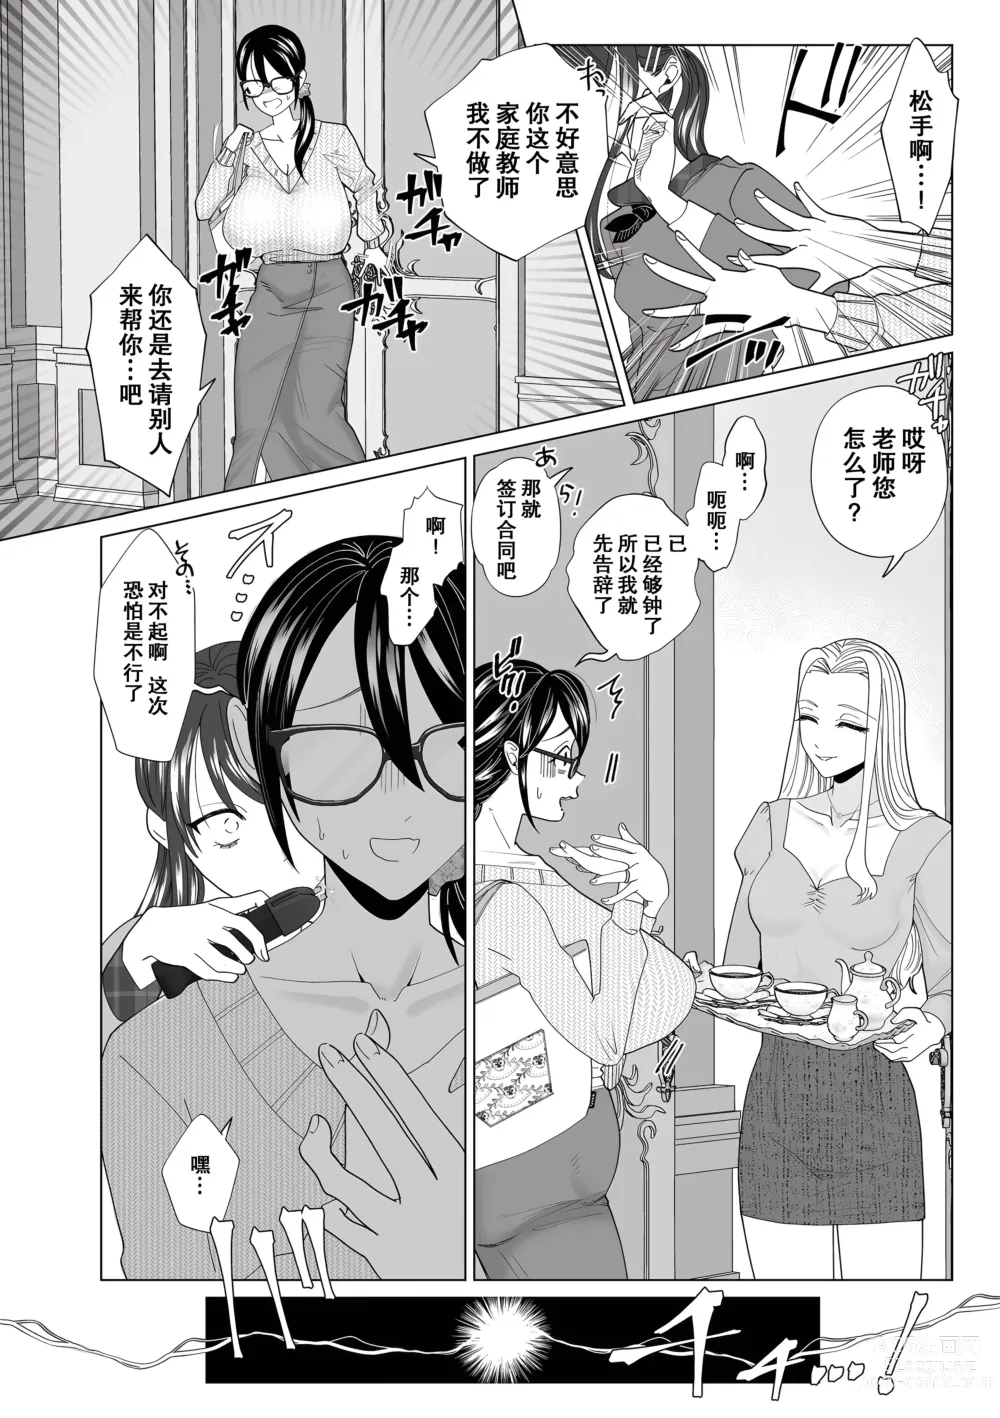 Page 7 of manga Torawarete